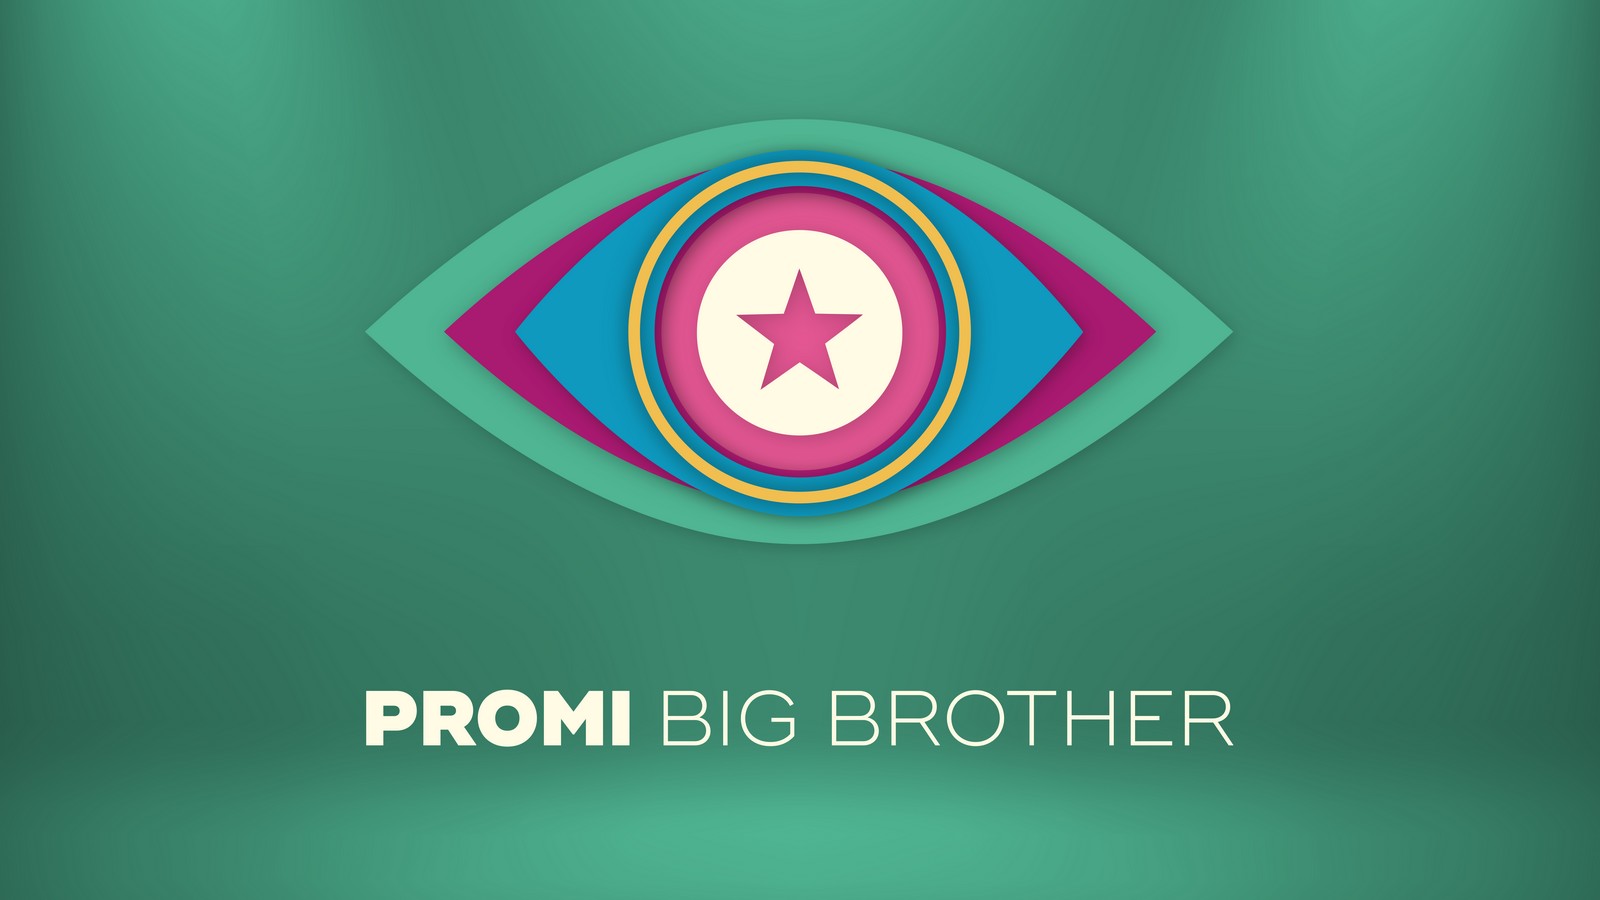 "Promi Big Brother"